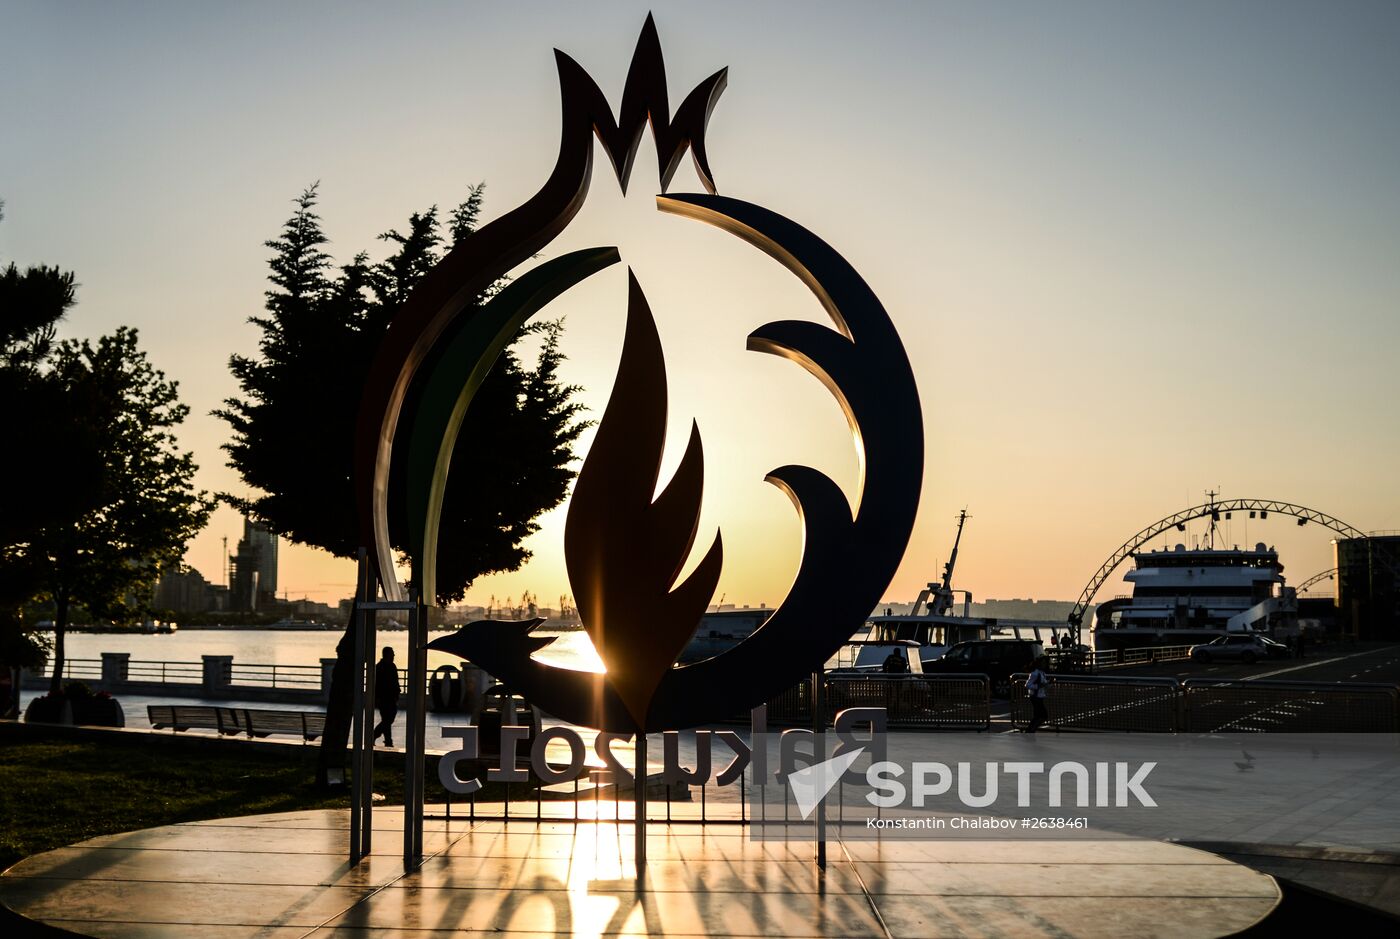 Baku awaits 2015 European Games